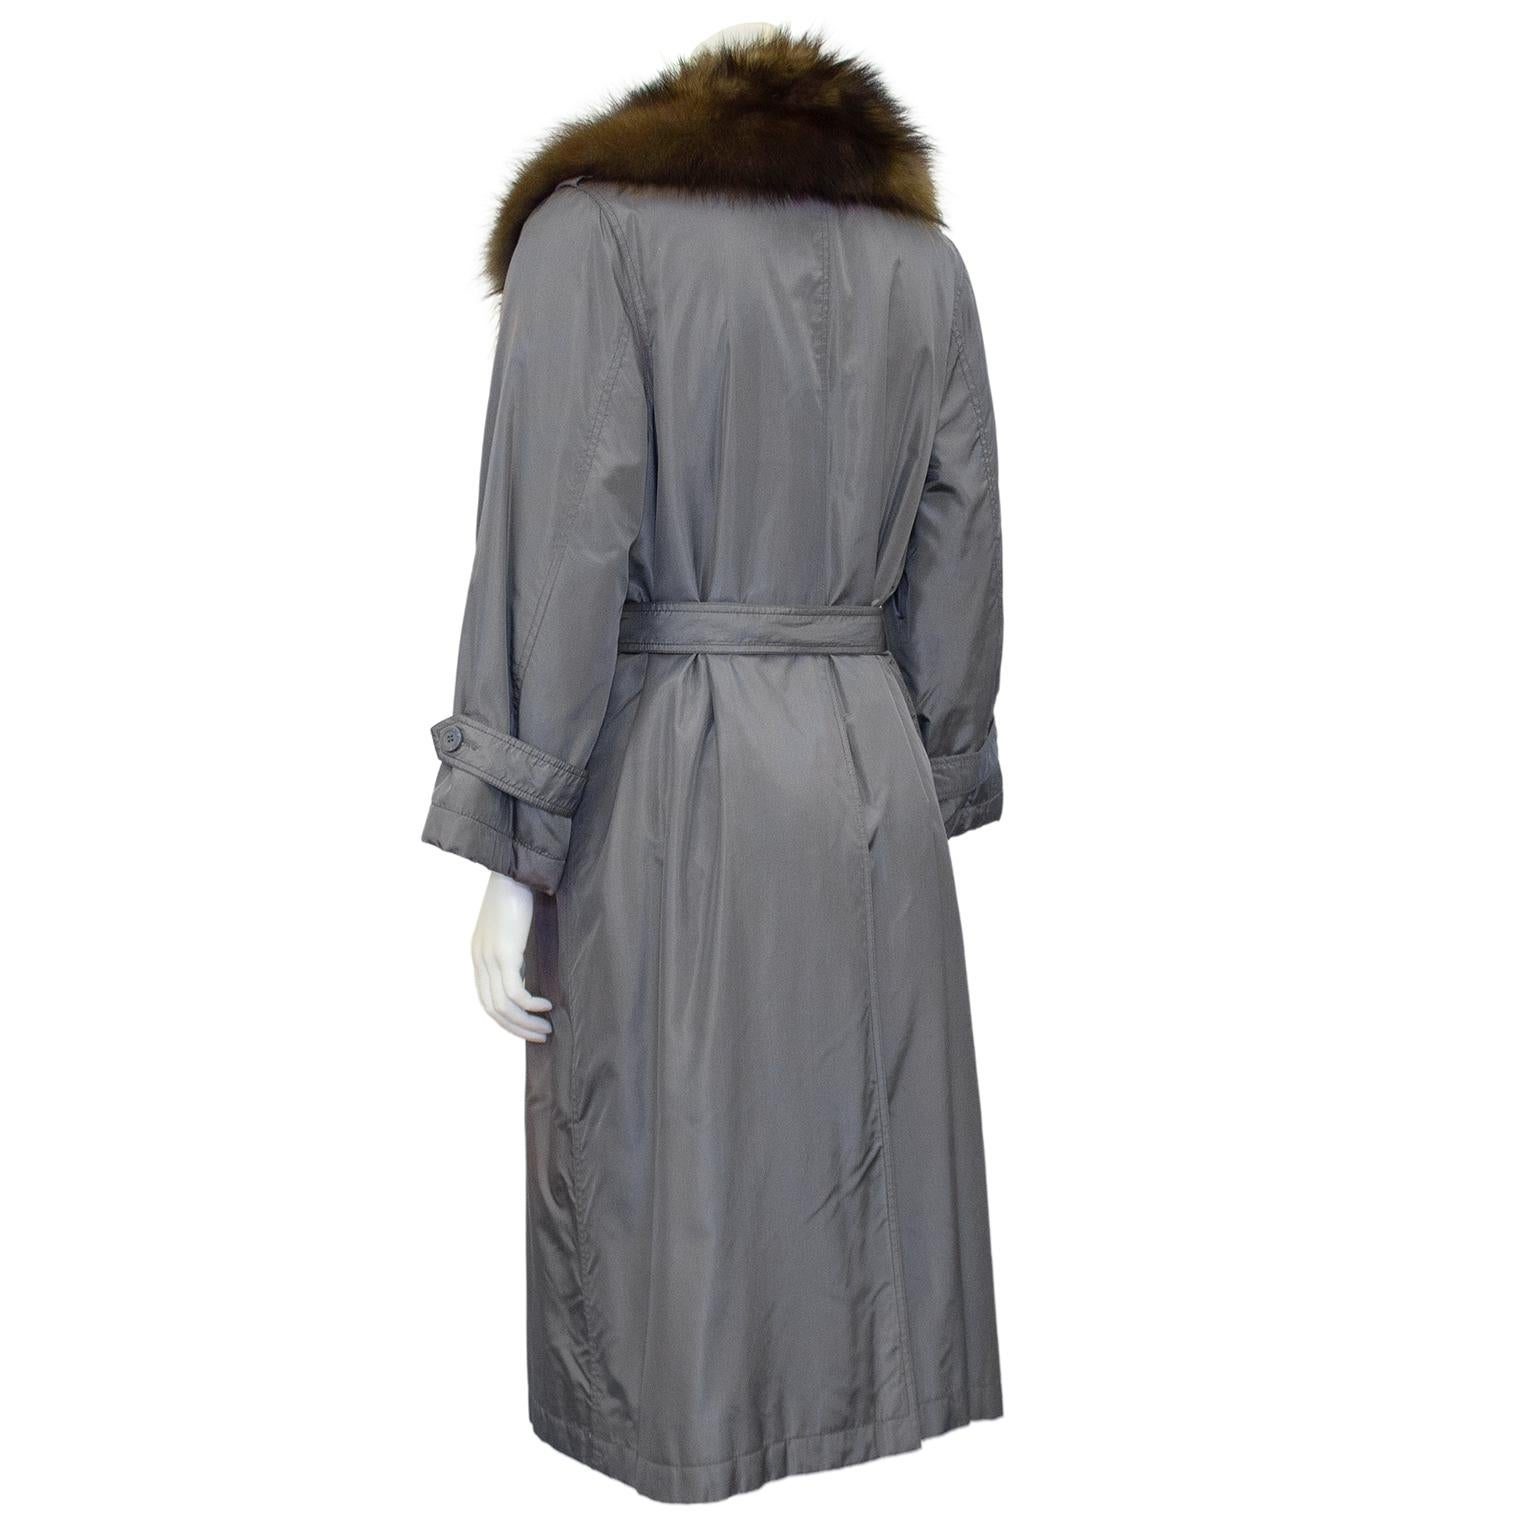 Herbst/Winter 1977 Christian Dior Haute Couture Trenchcoat mit Pelzkragen (Grau) im Angebot